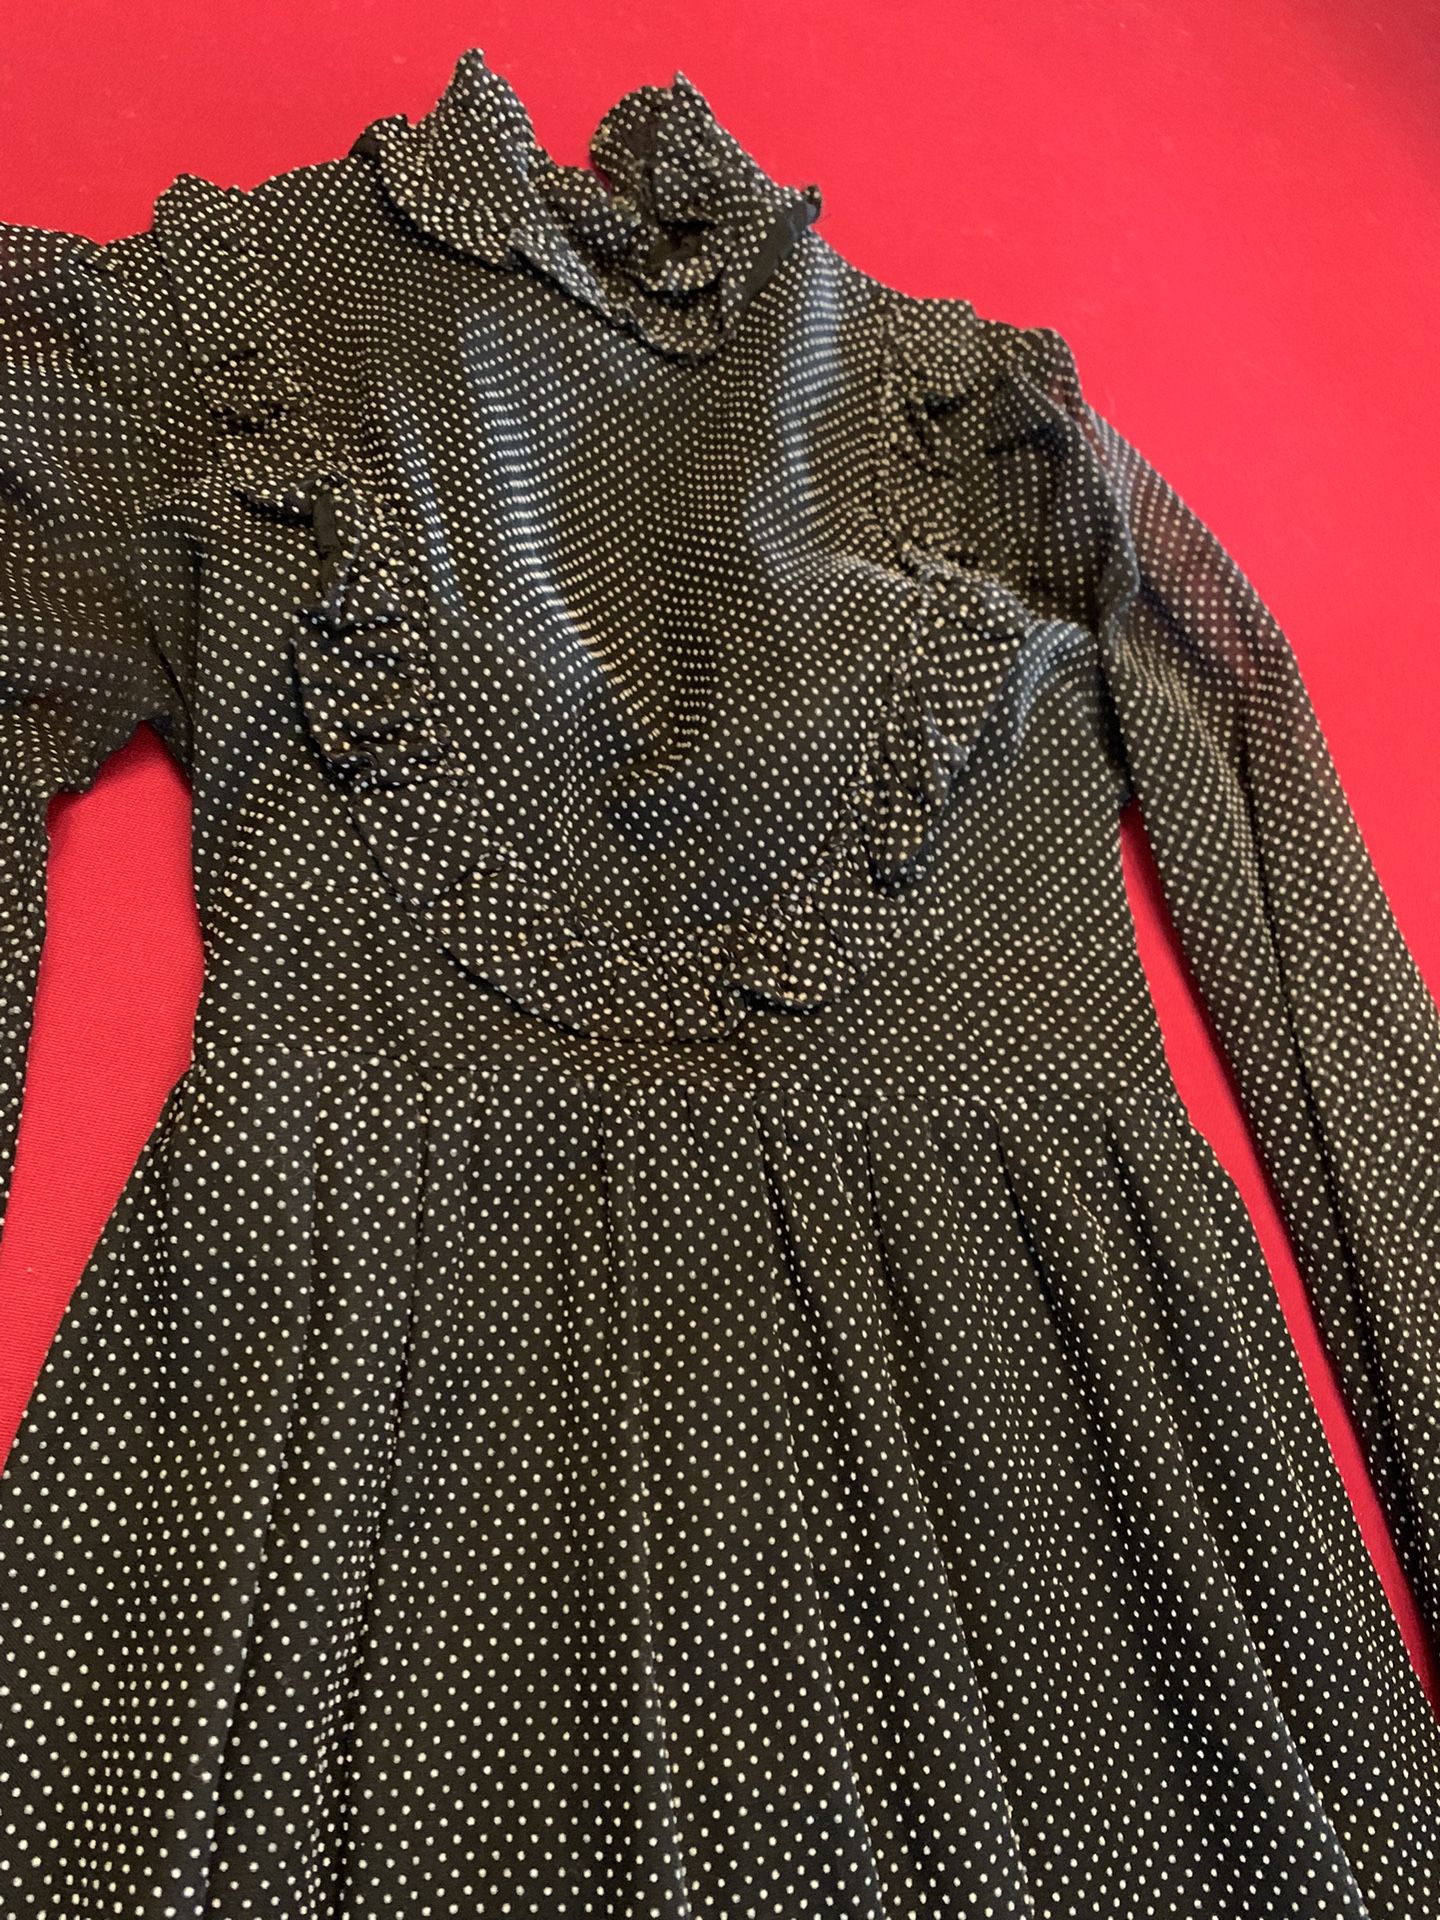 Long Black Dotted Swiss Dress, Size 9